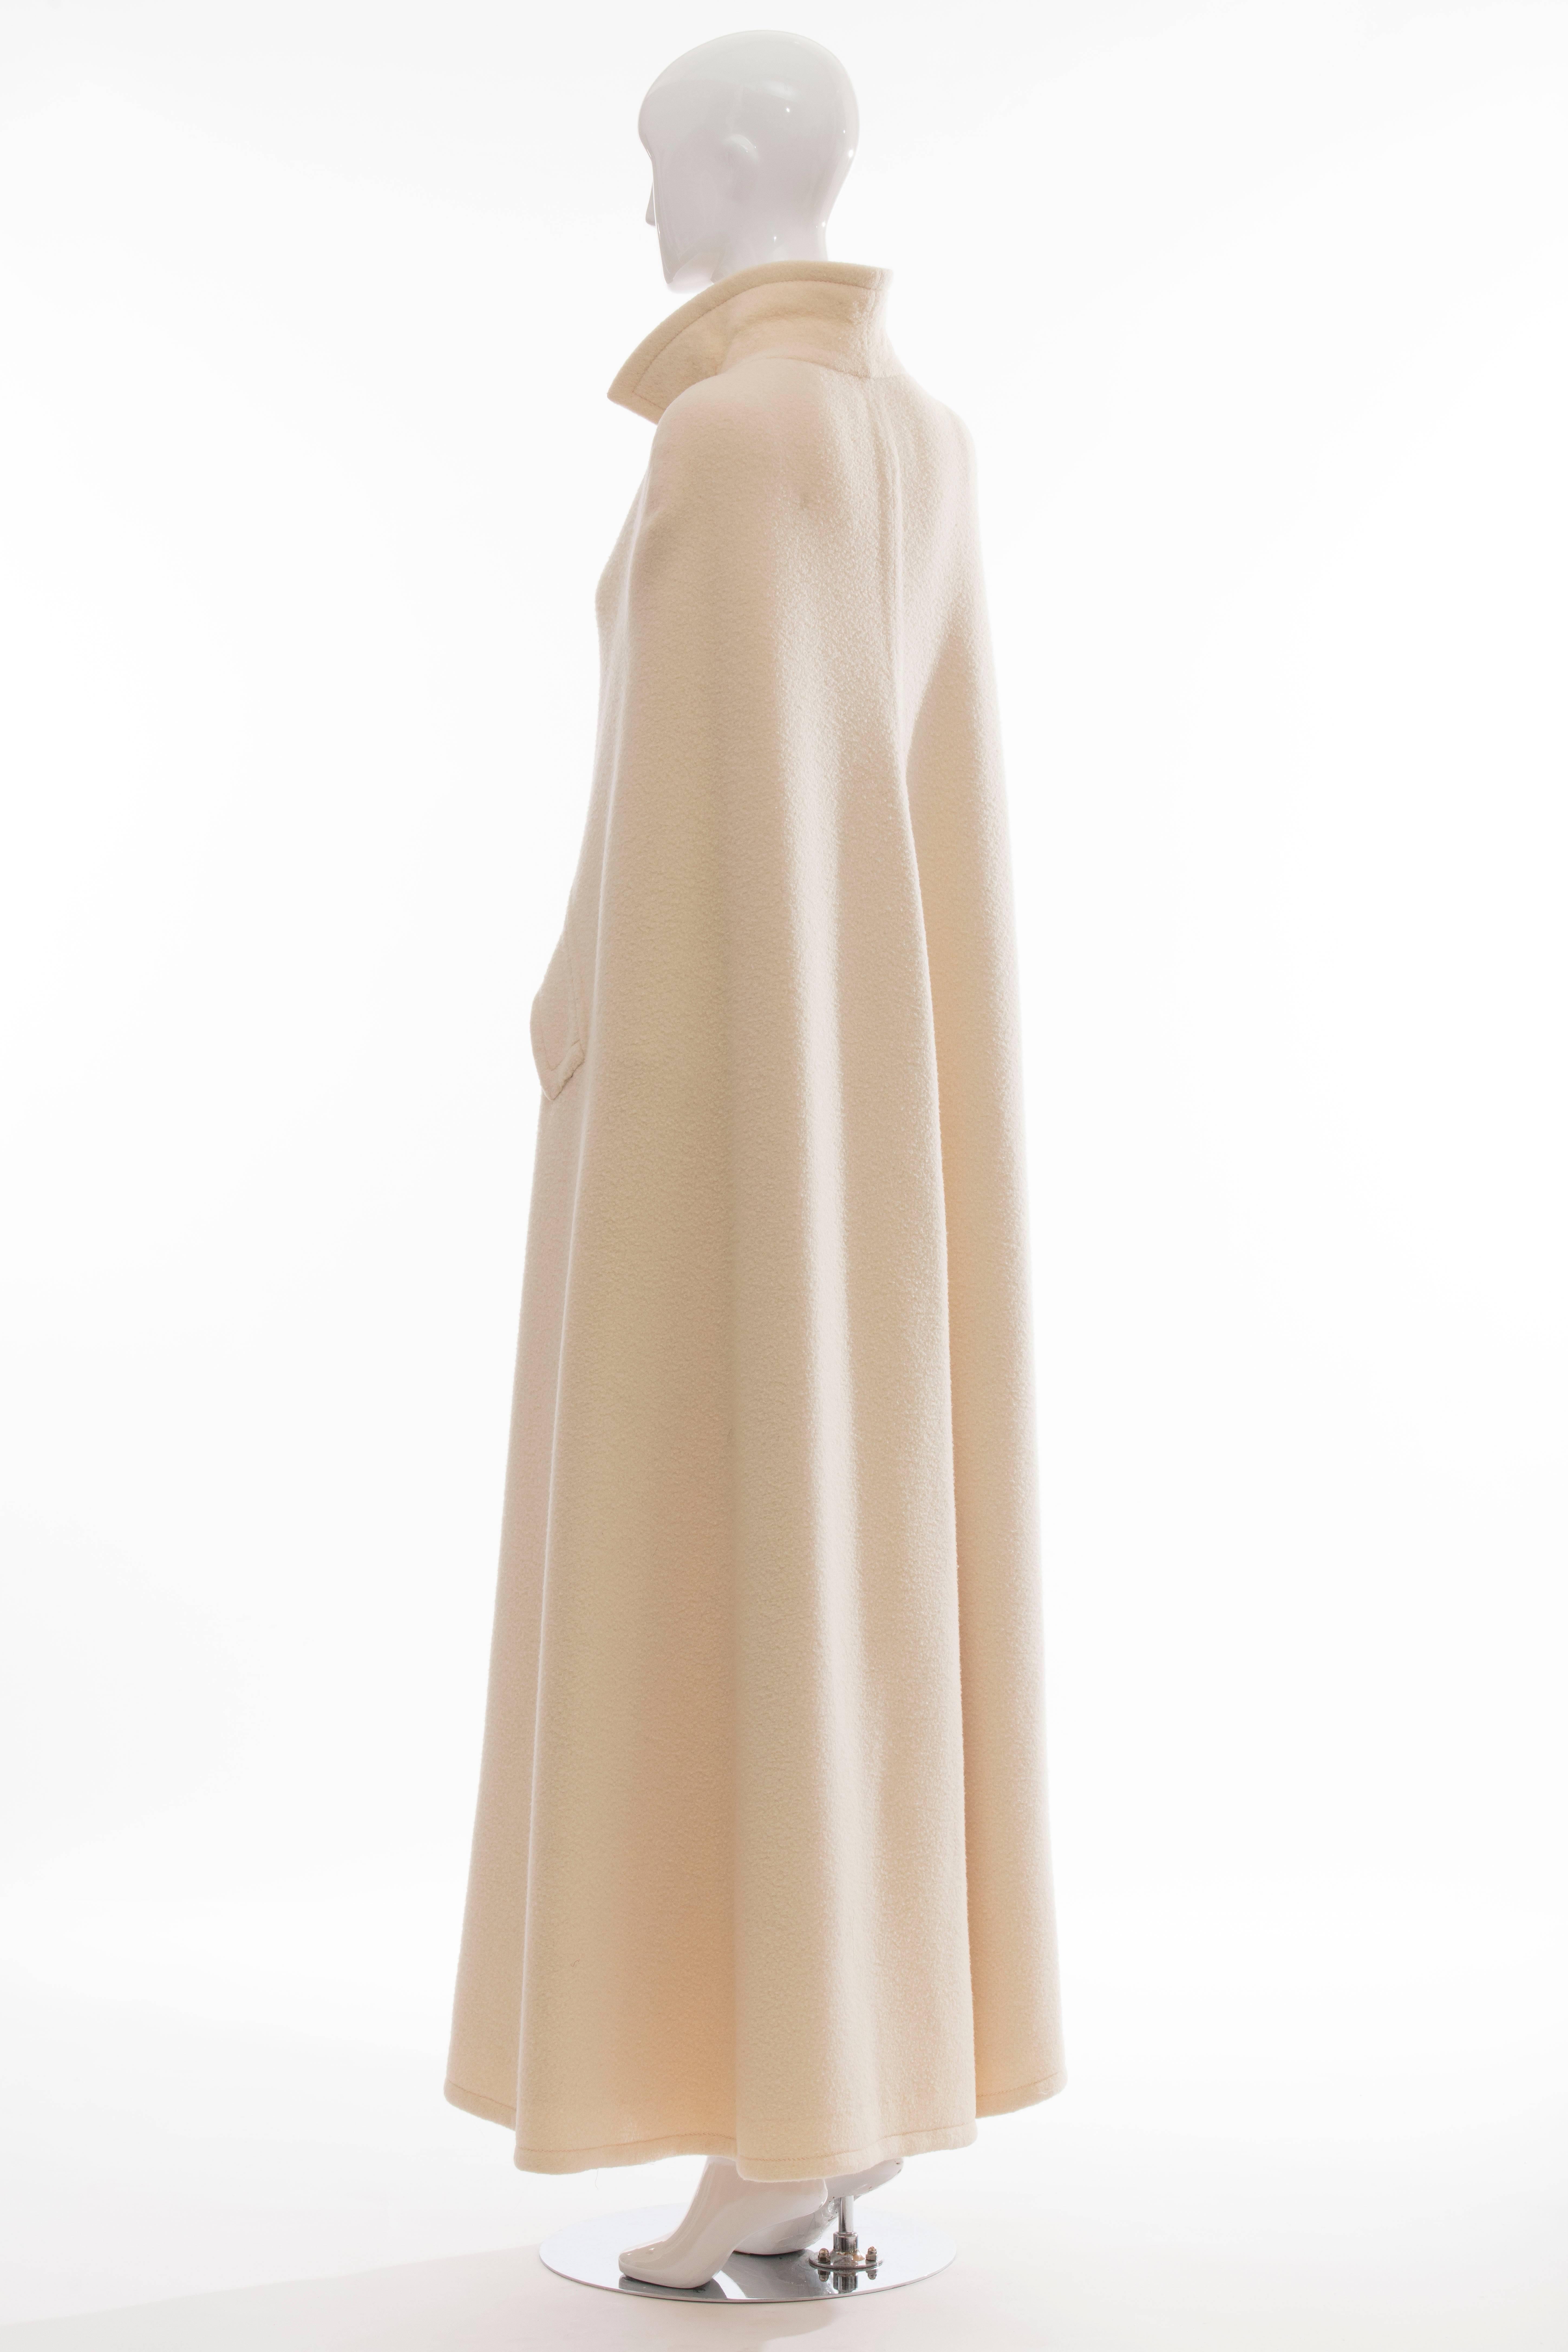 Beige Christian Dior Haute Couture By Marc Bohan Cream Wool Cape, Autumn - Winter 1966